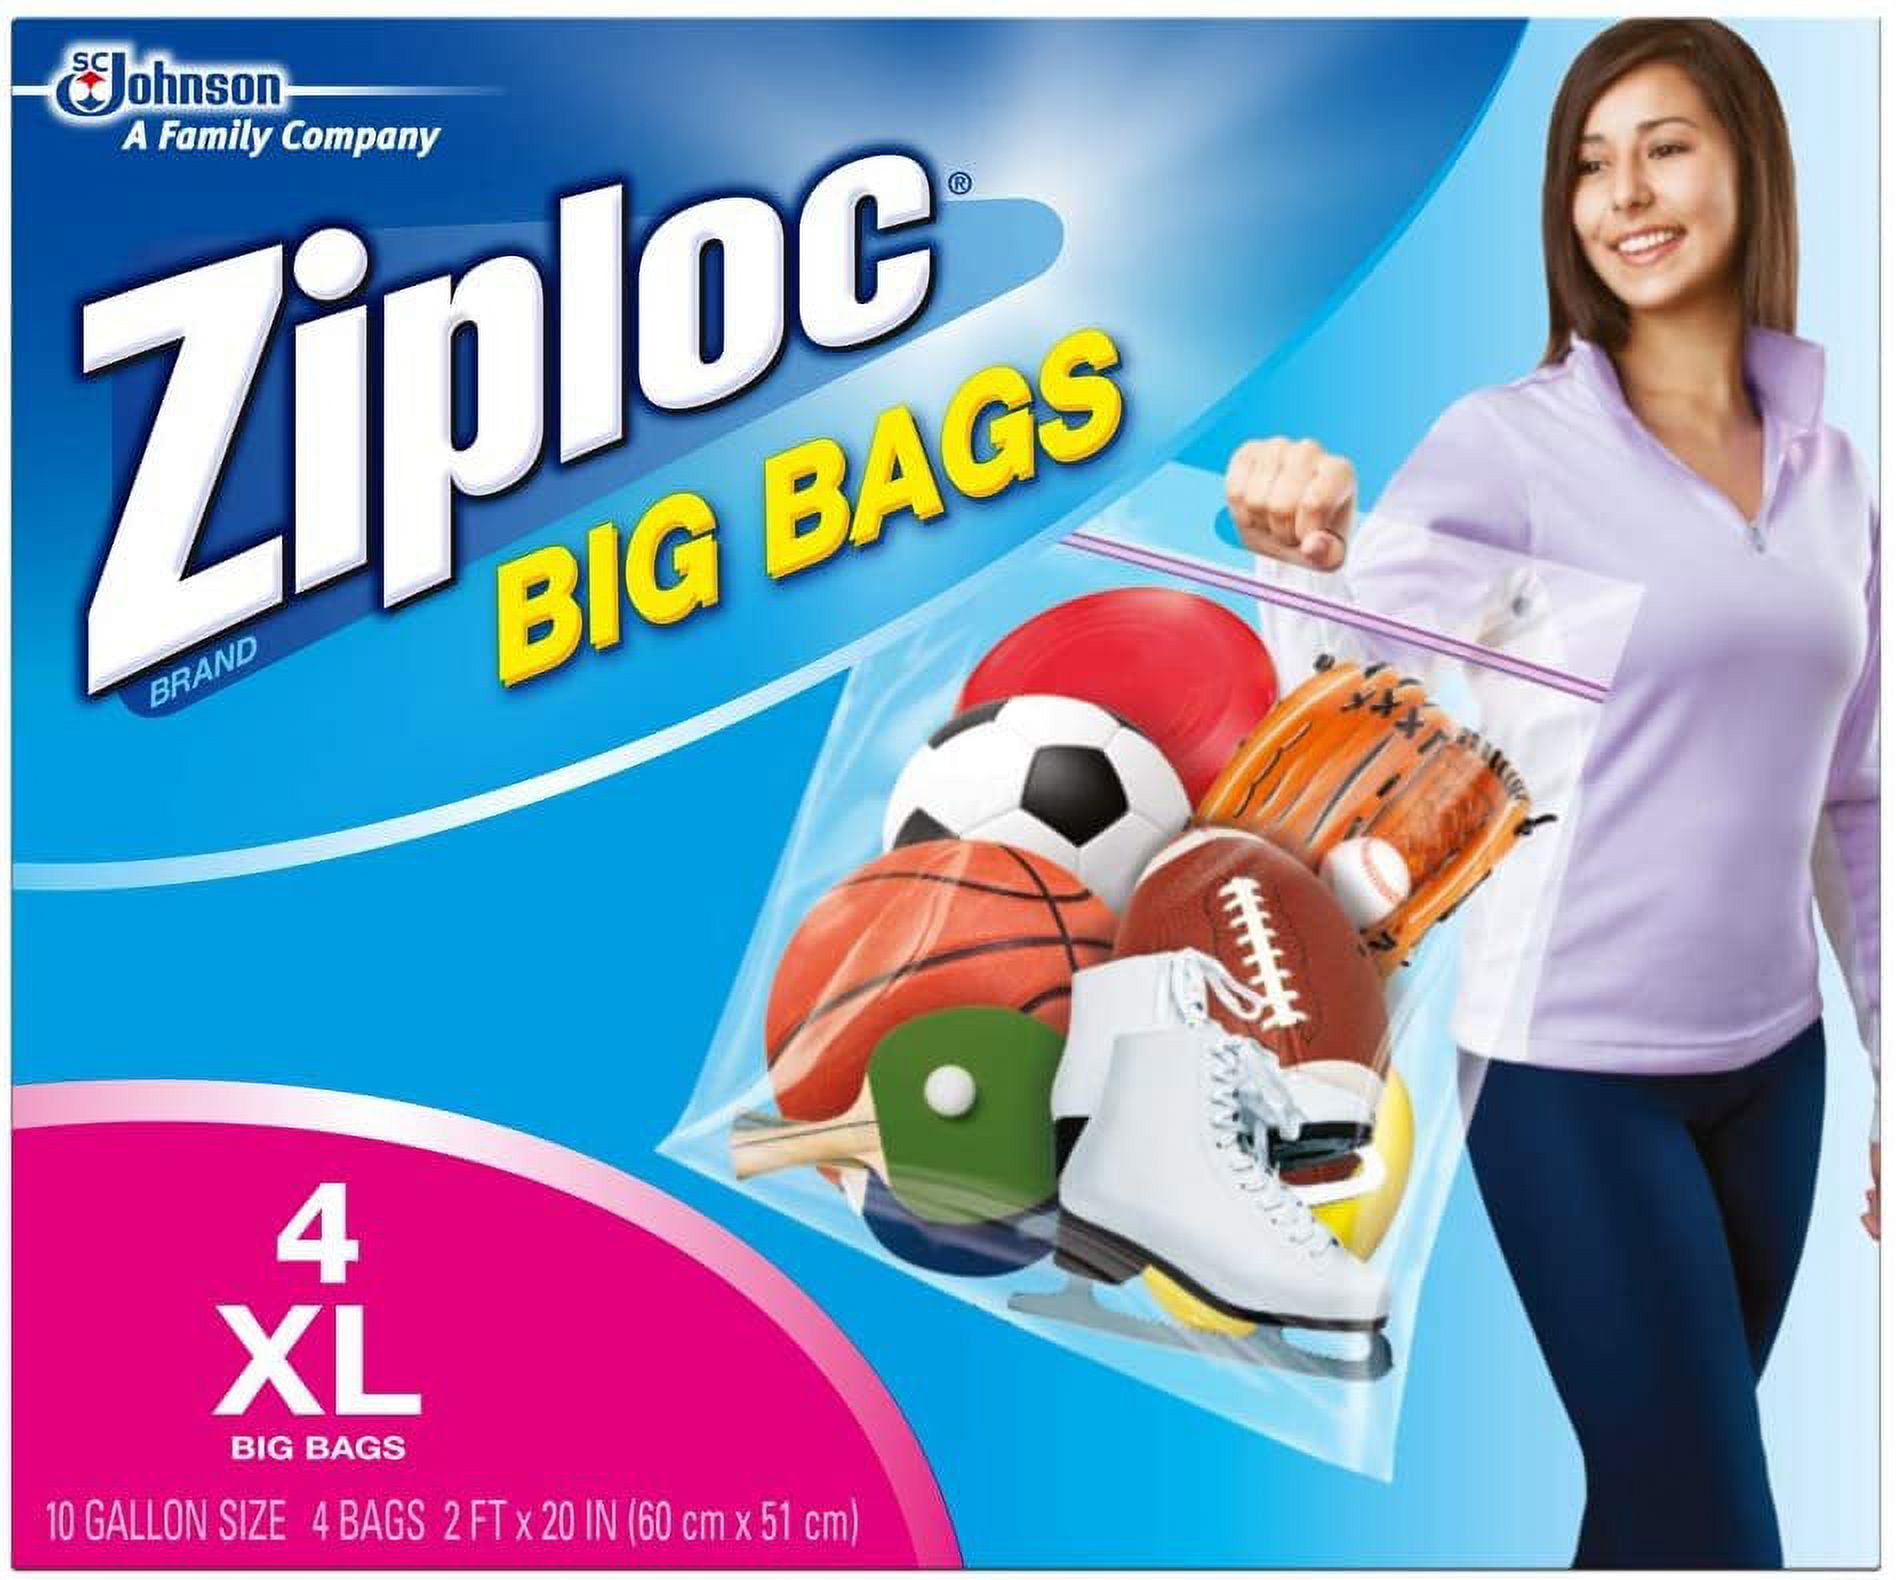 Ziploc Big Bags XXL Storage Bags - 3 Count, Clear